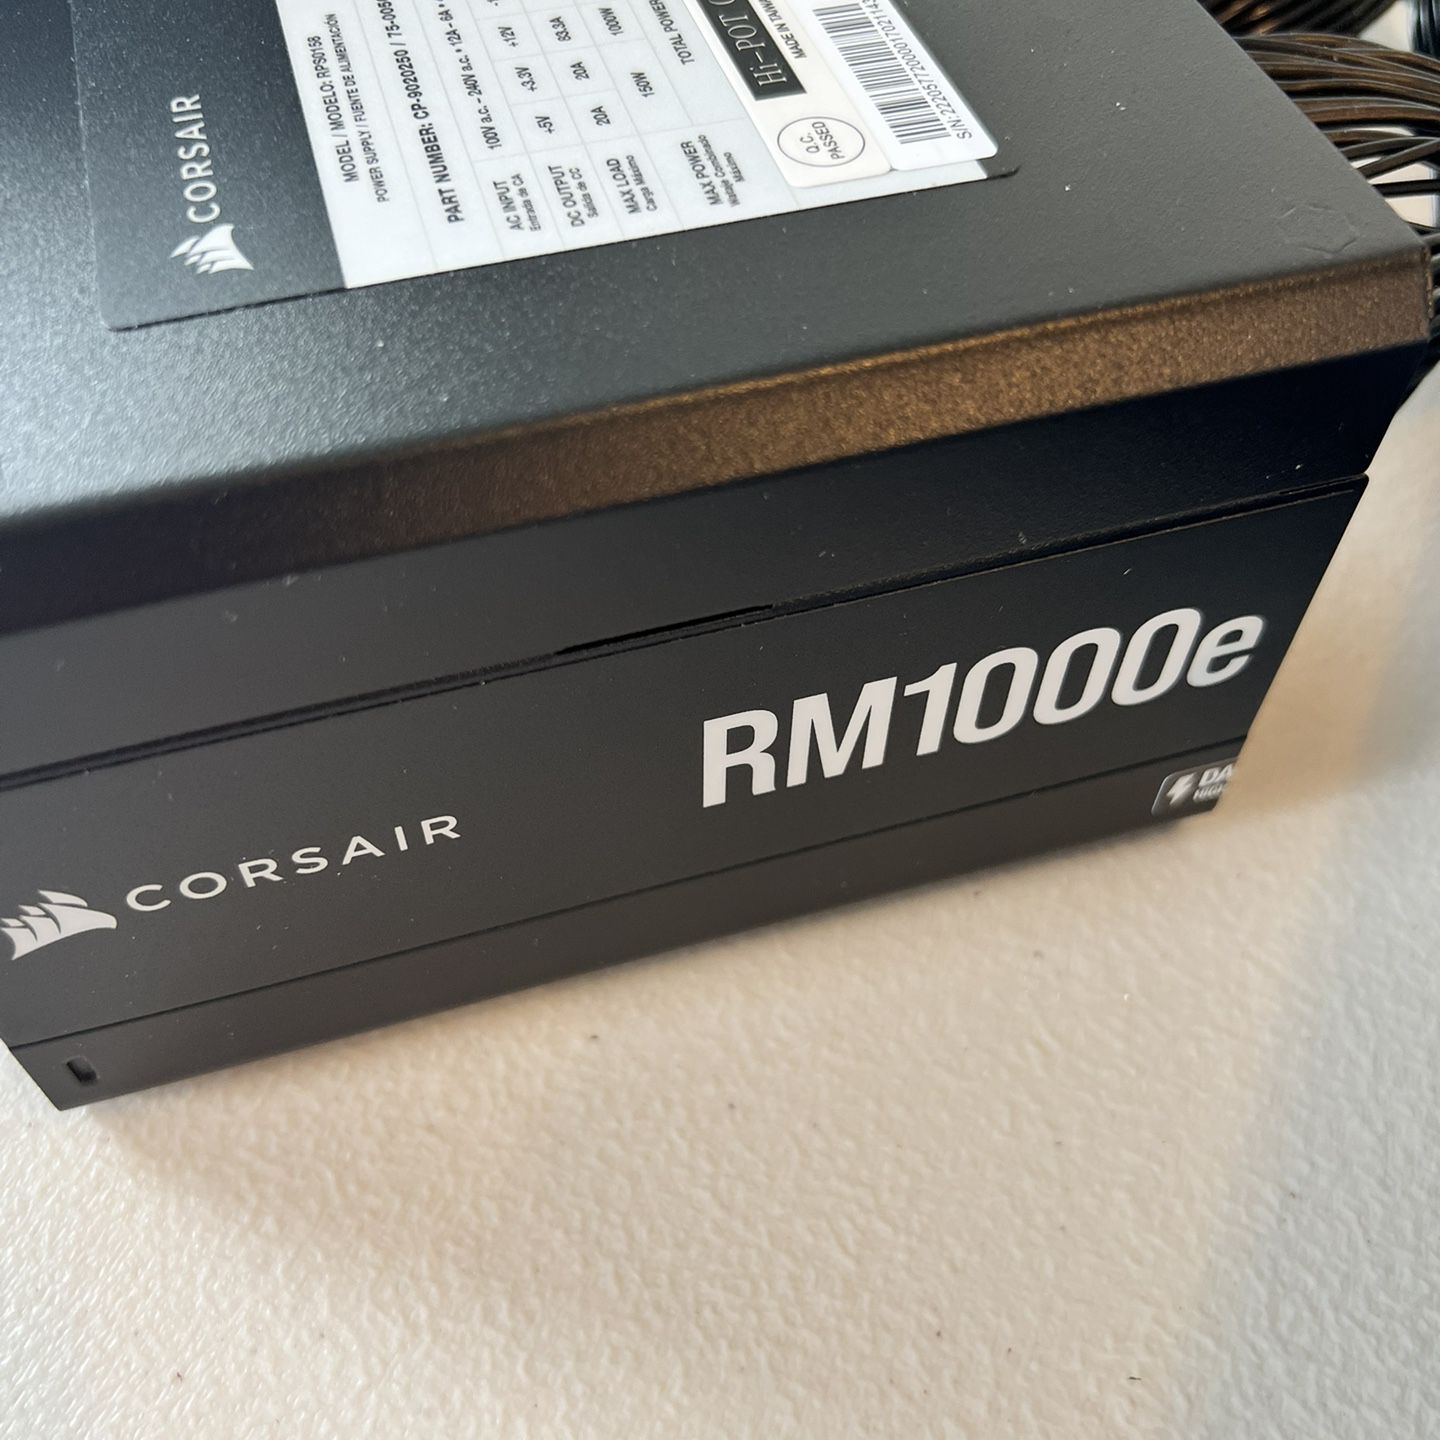 Corsair RM 1000e for Sale in San Antonio, TX - OfferUp